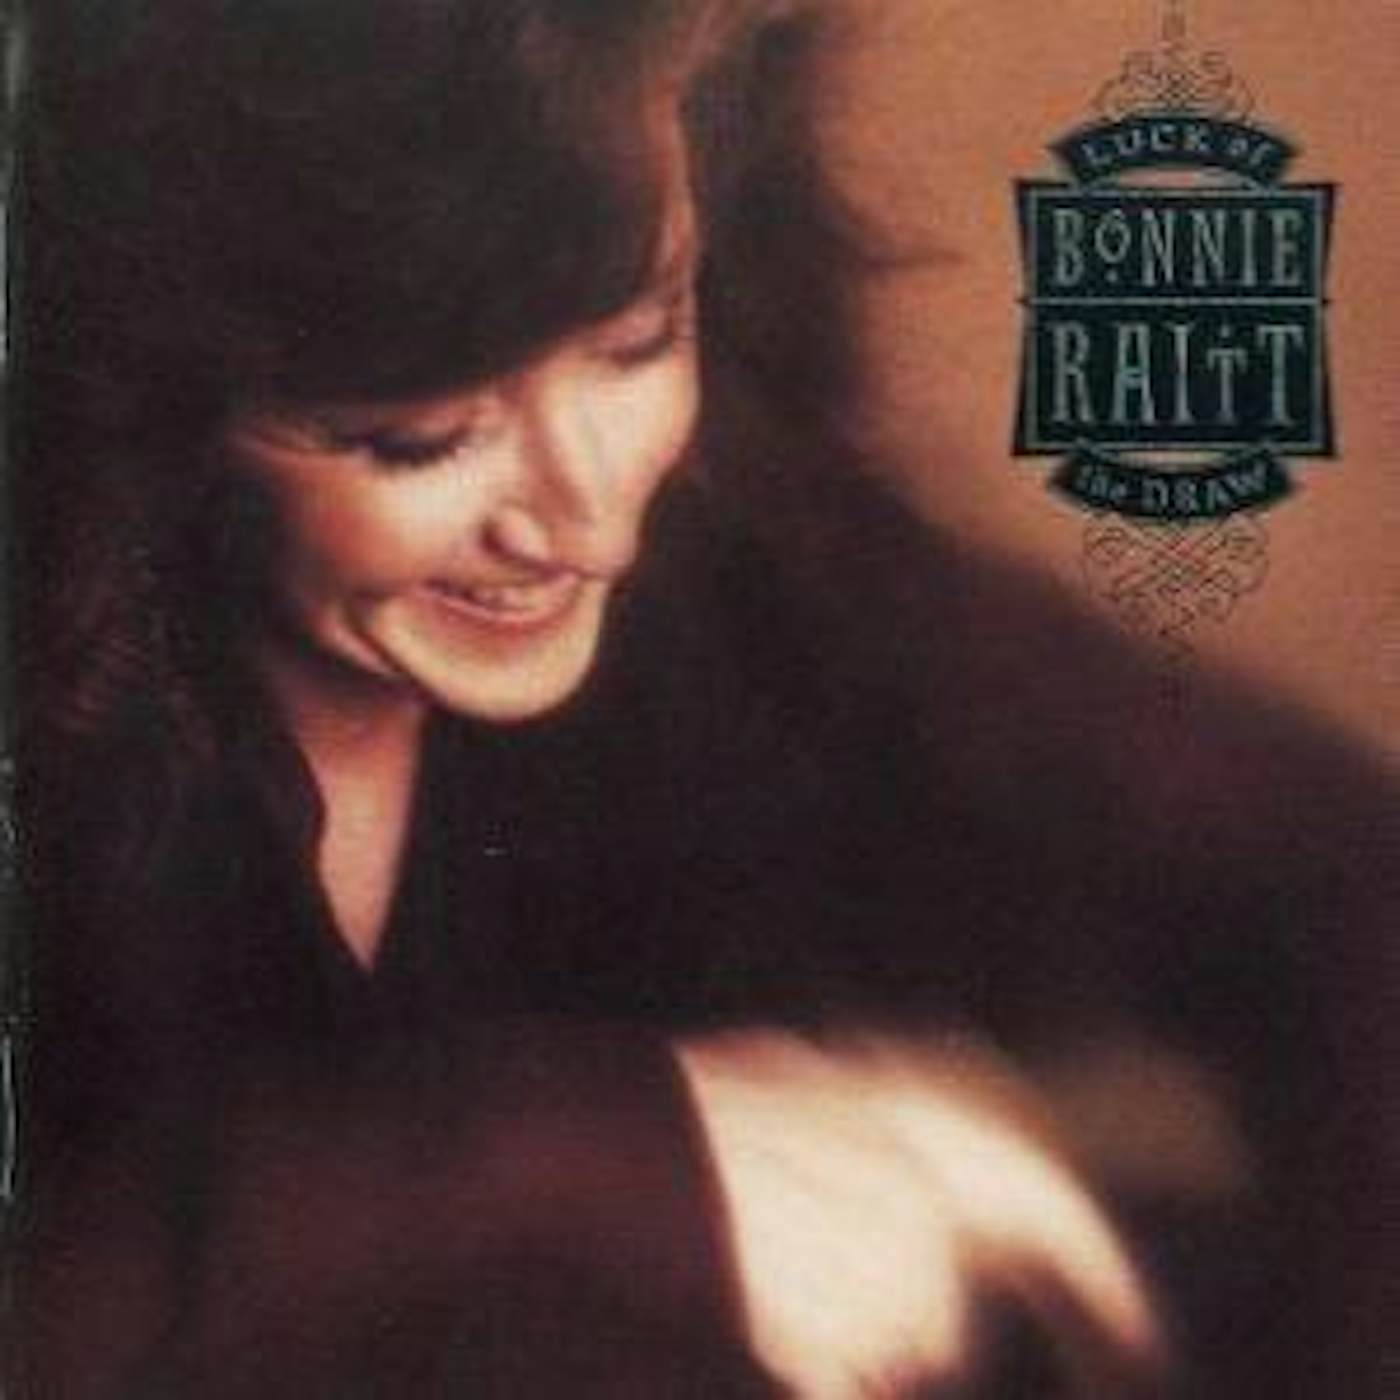 Bonnie Raitt LUCK OF DRAW CD